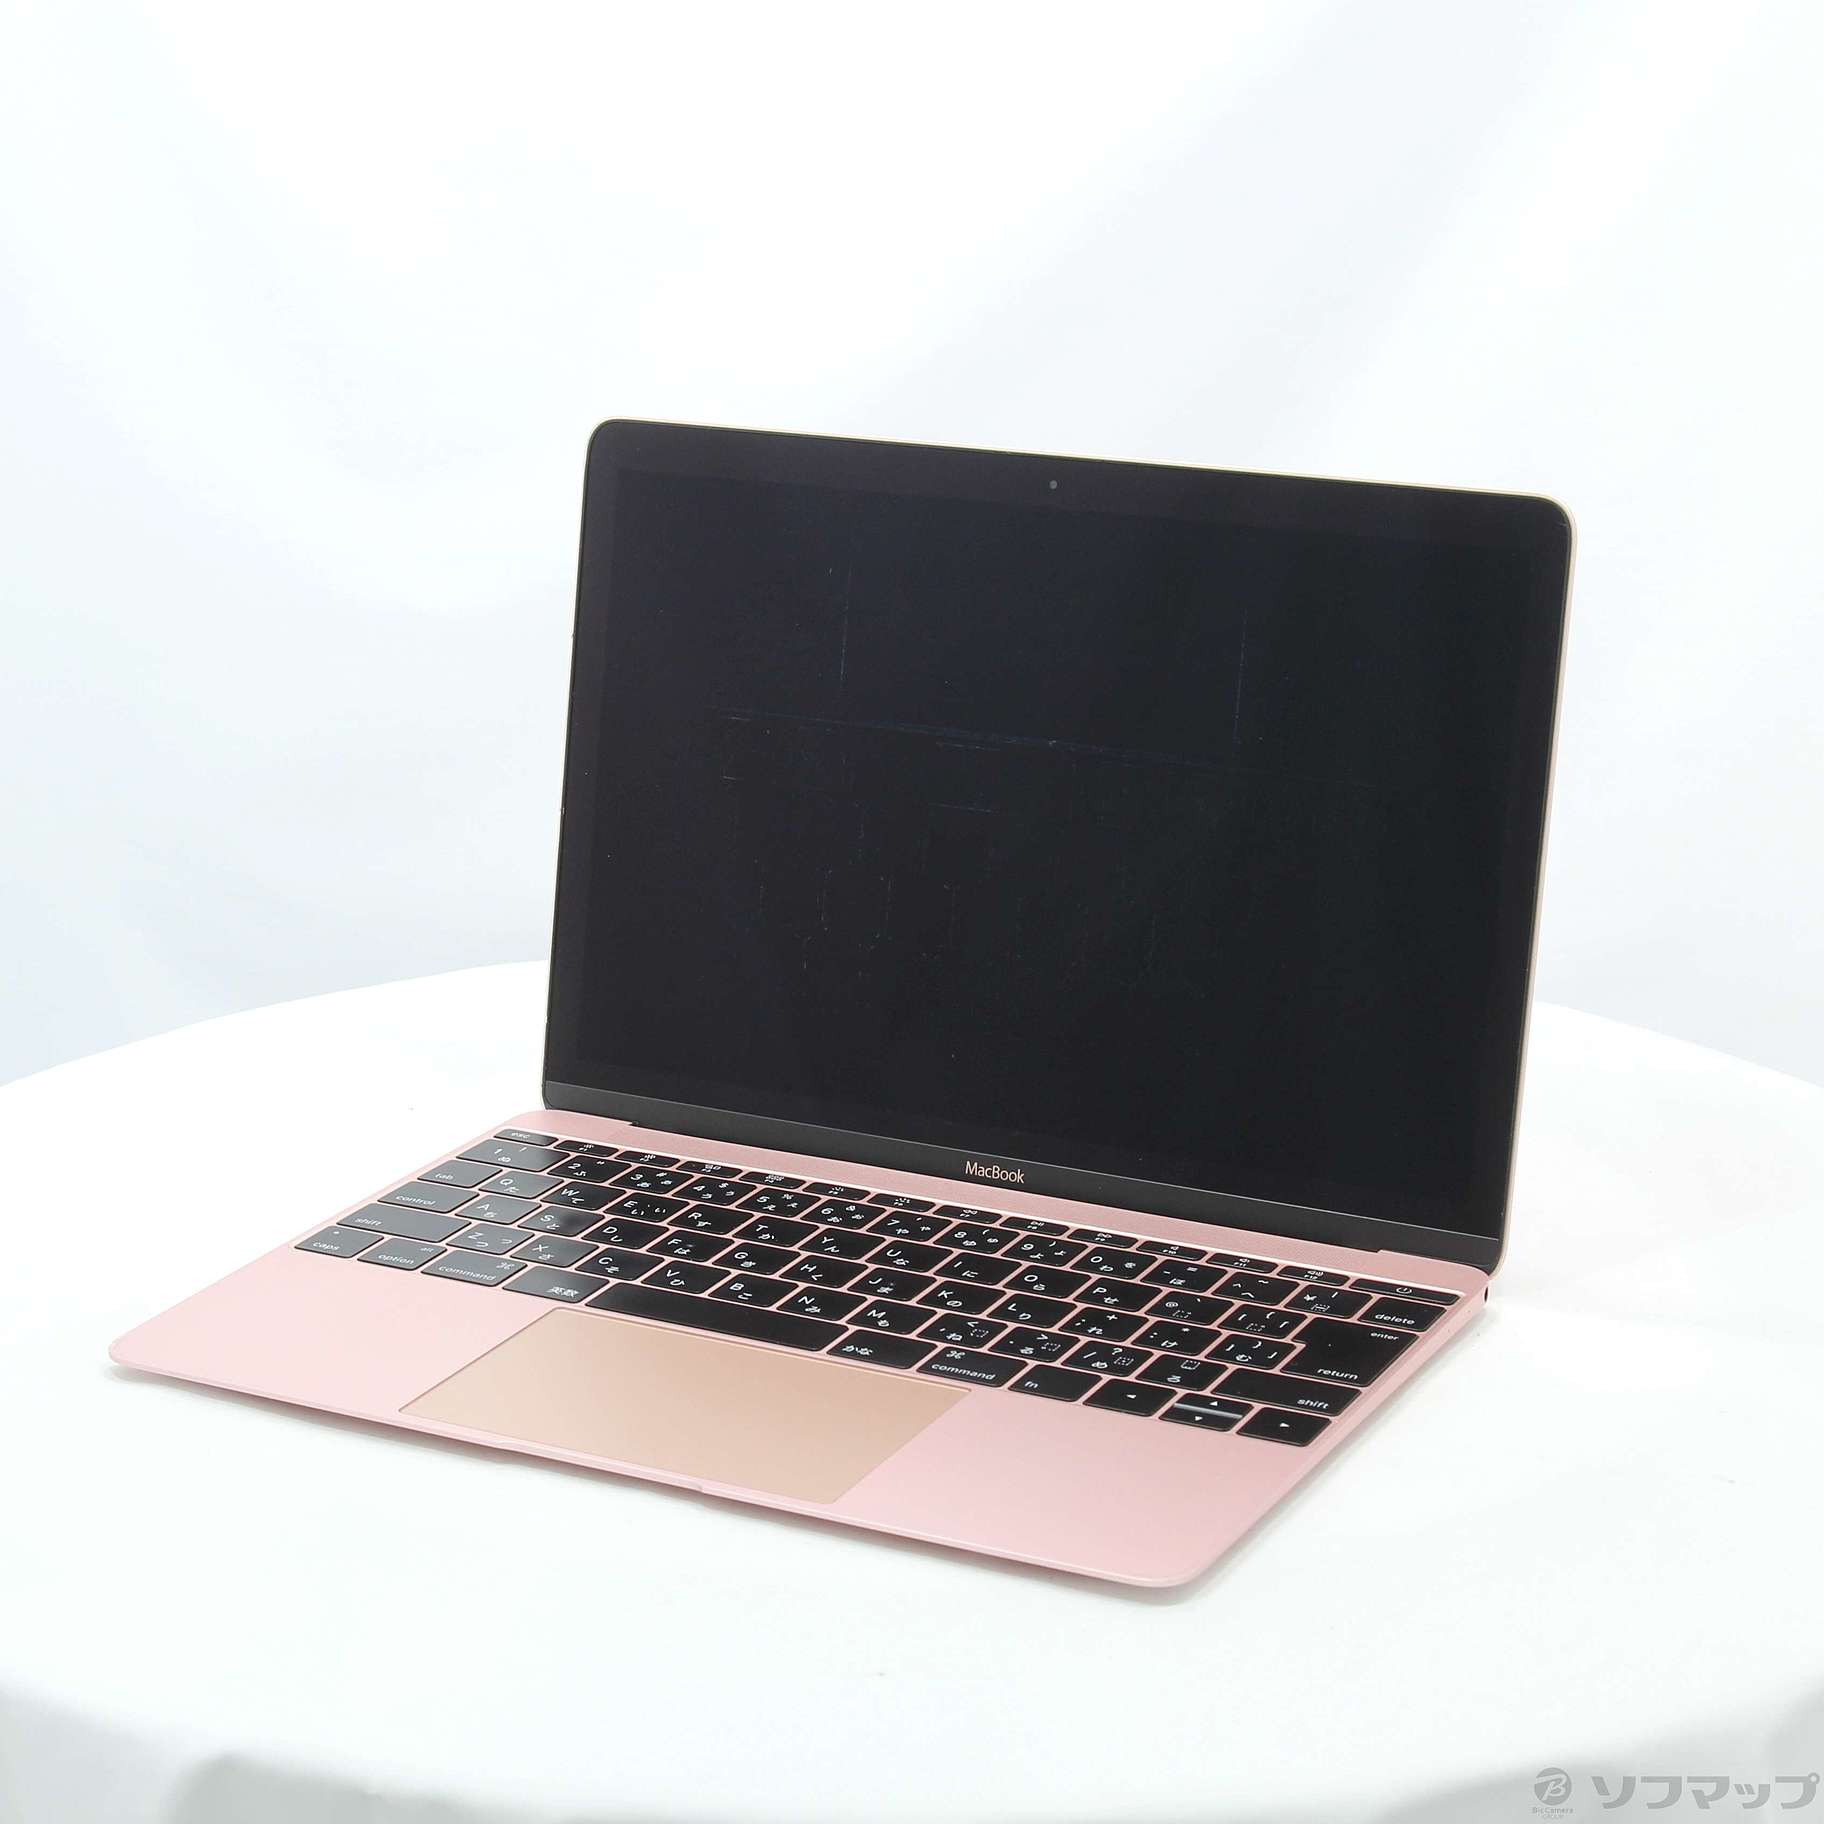 MacBook early 2016 難ありベゼルのゴム劣化